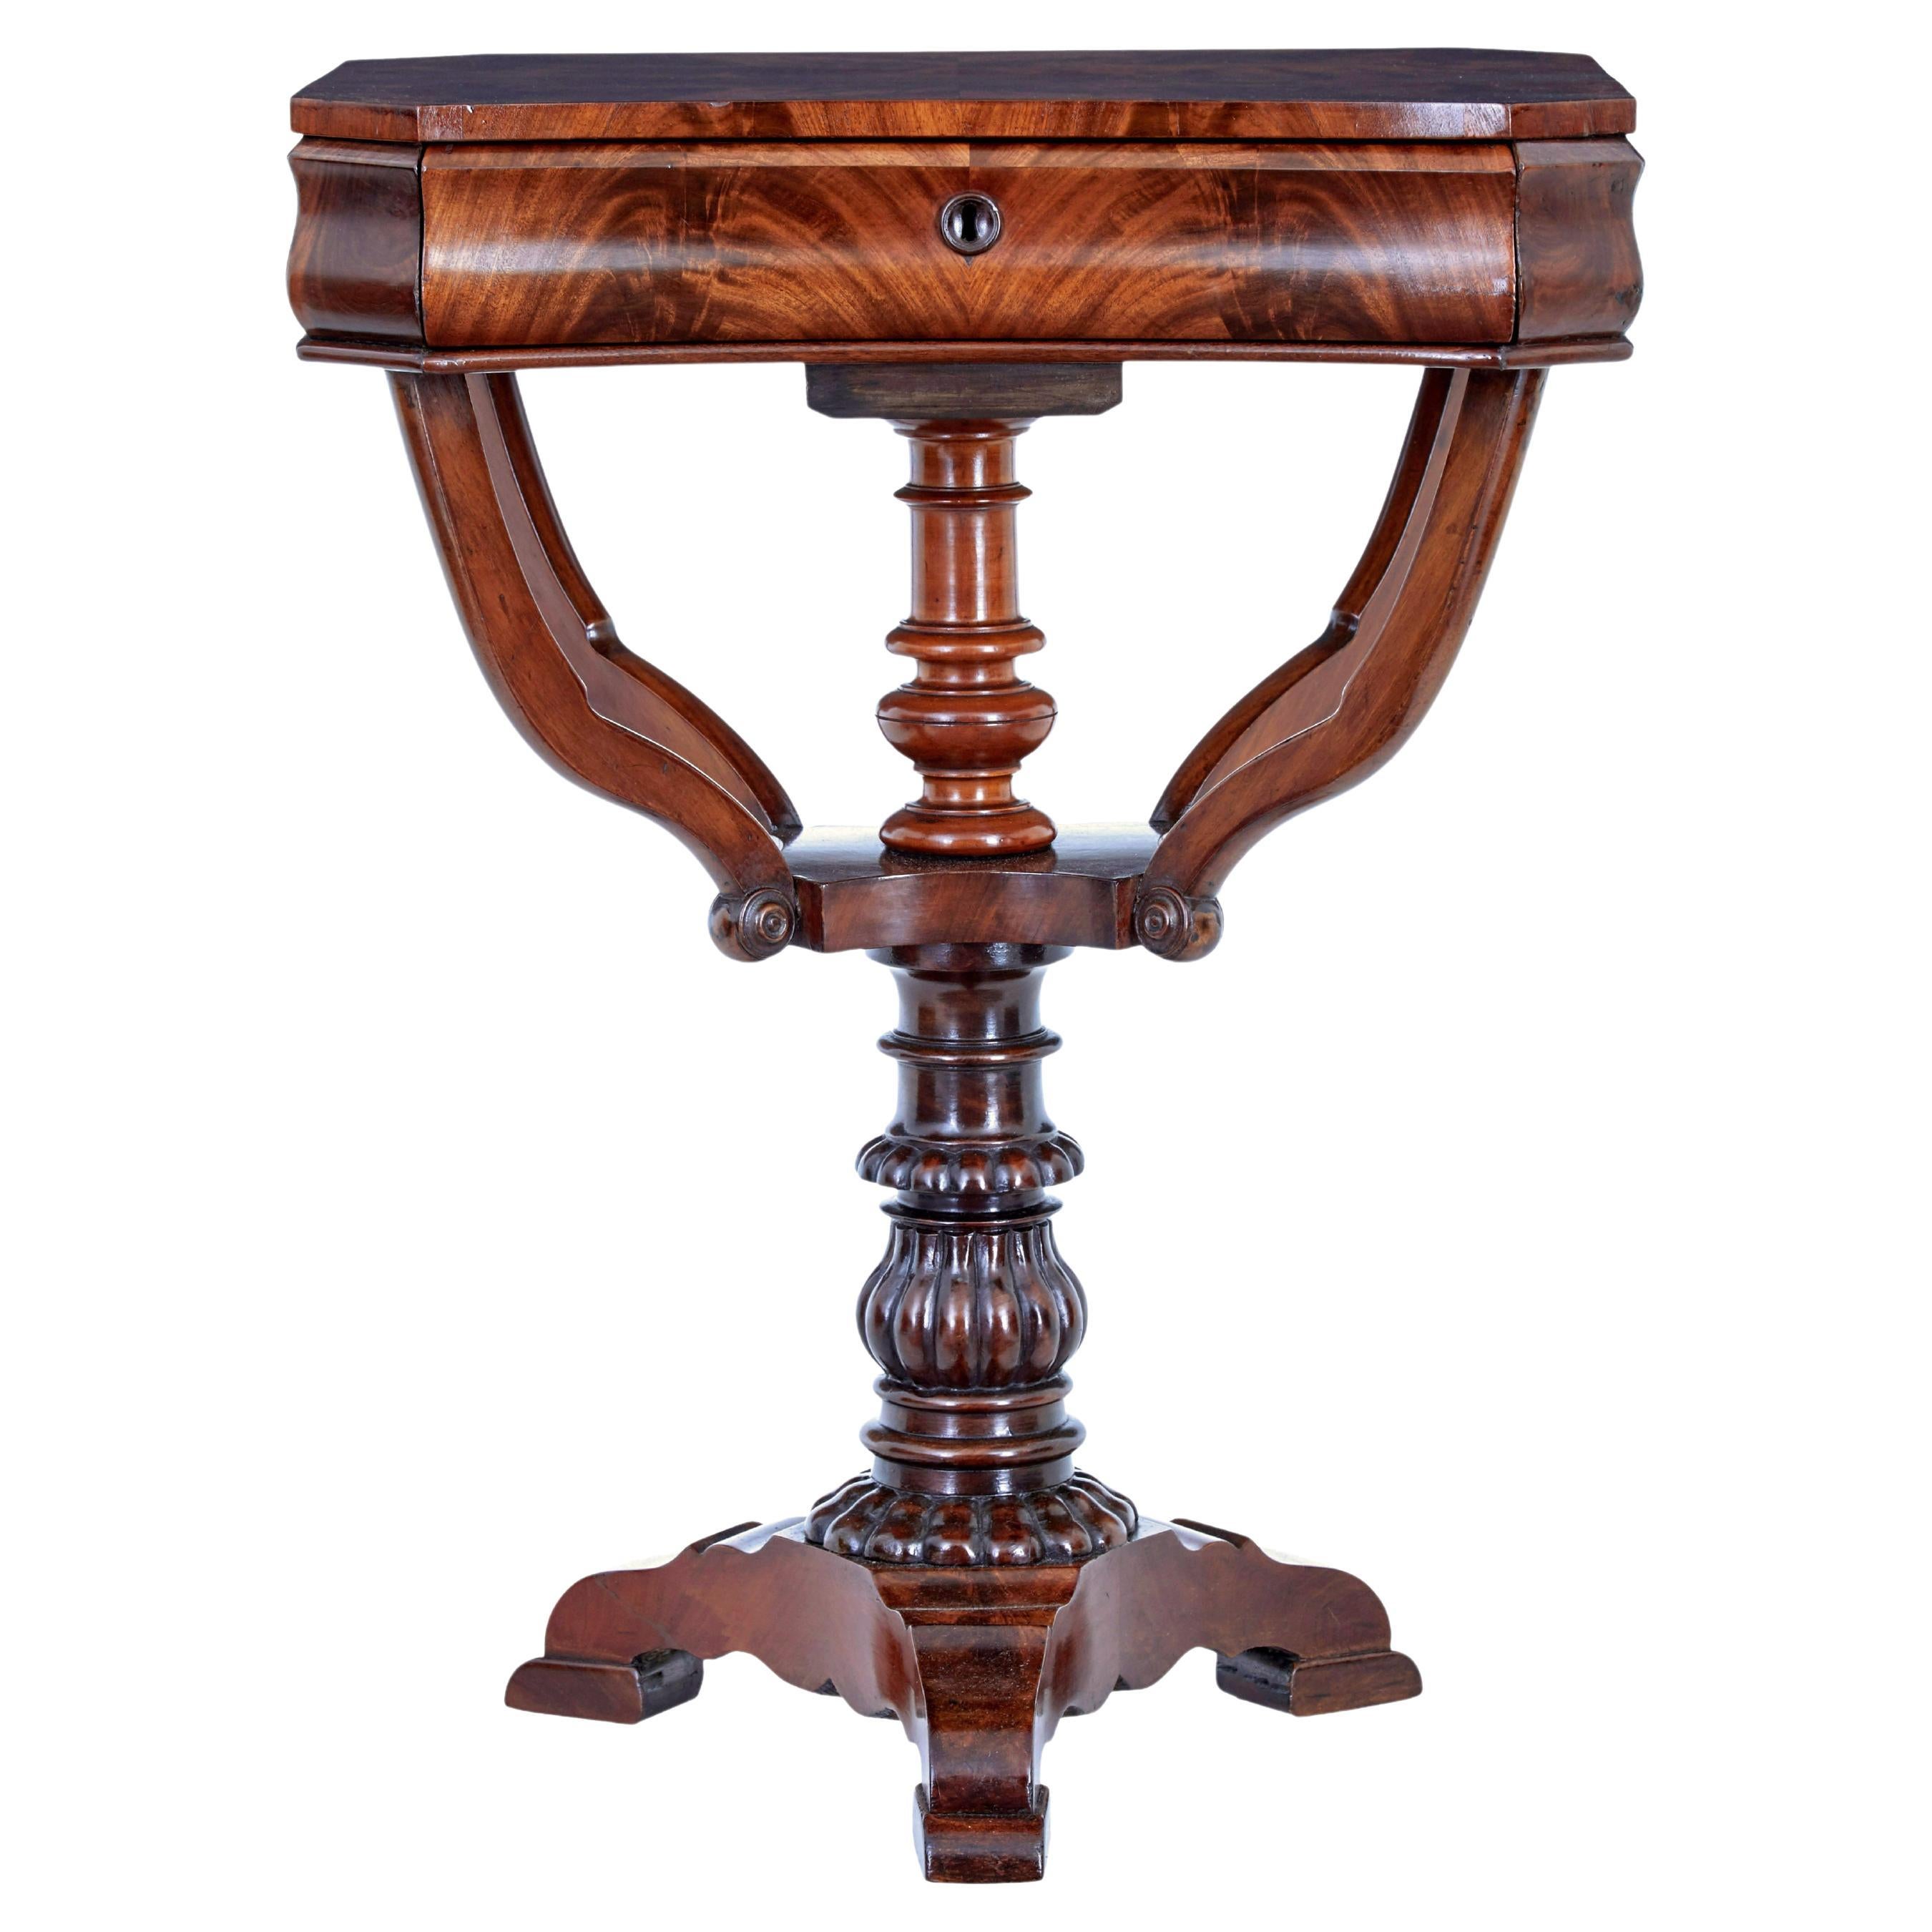 Danish 19th century flame mahogany side table